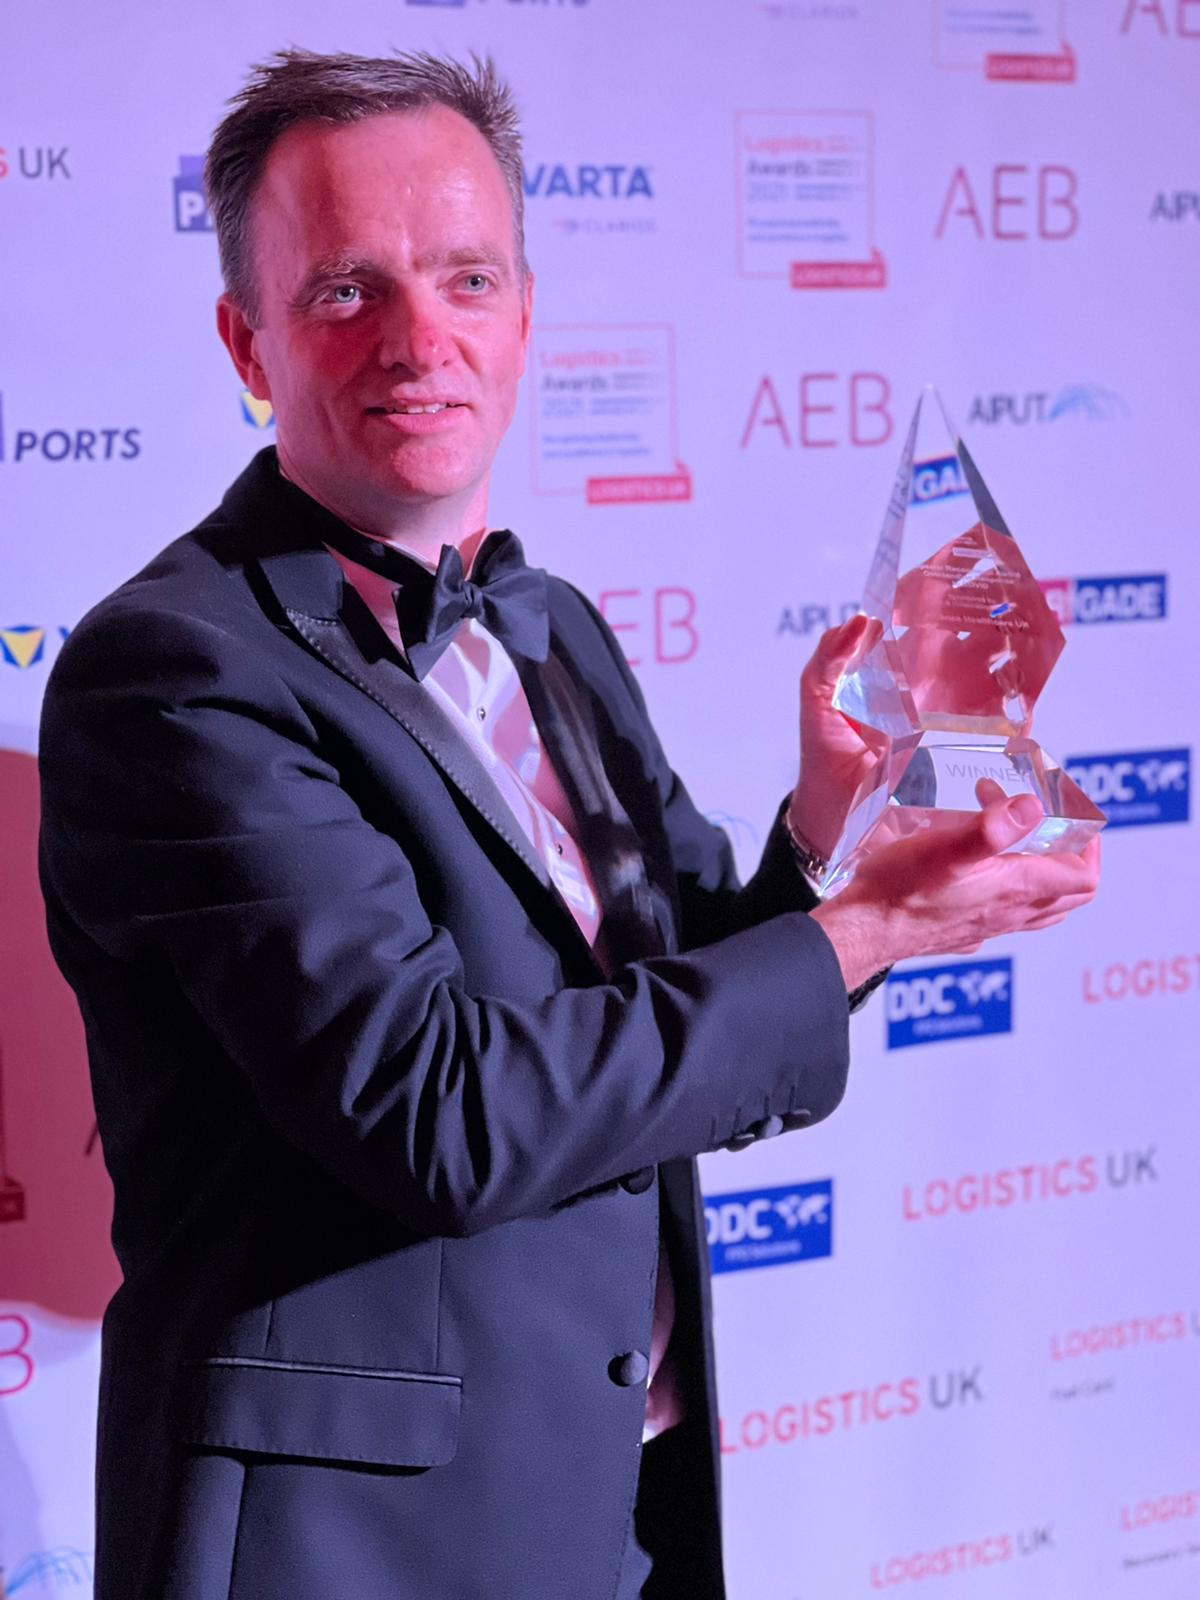 Matt Addison, Operations Director, Alliance Healthcare UK with the award